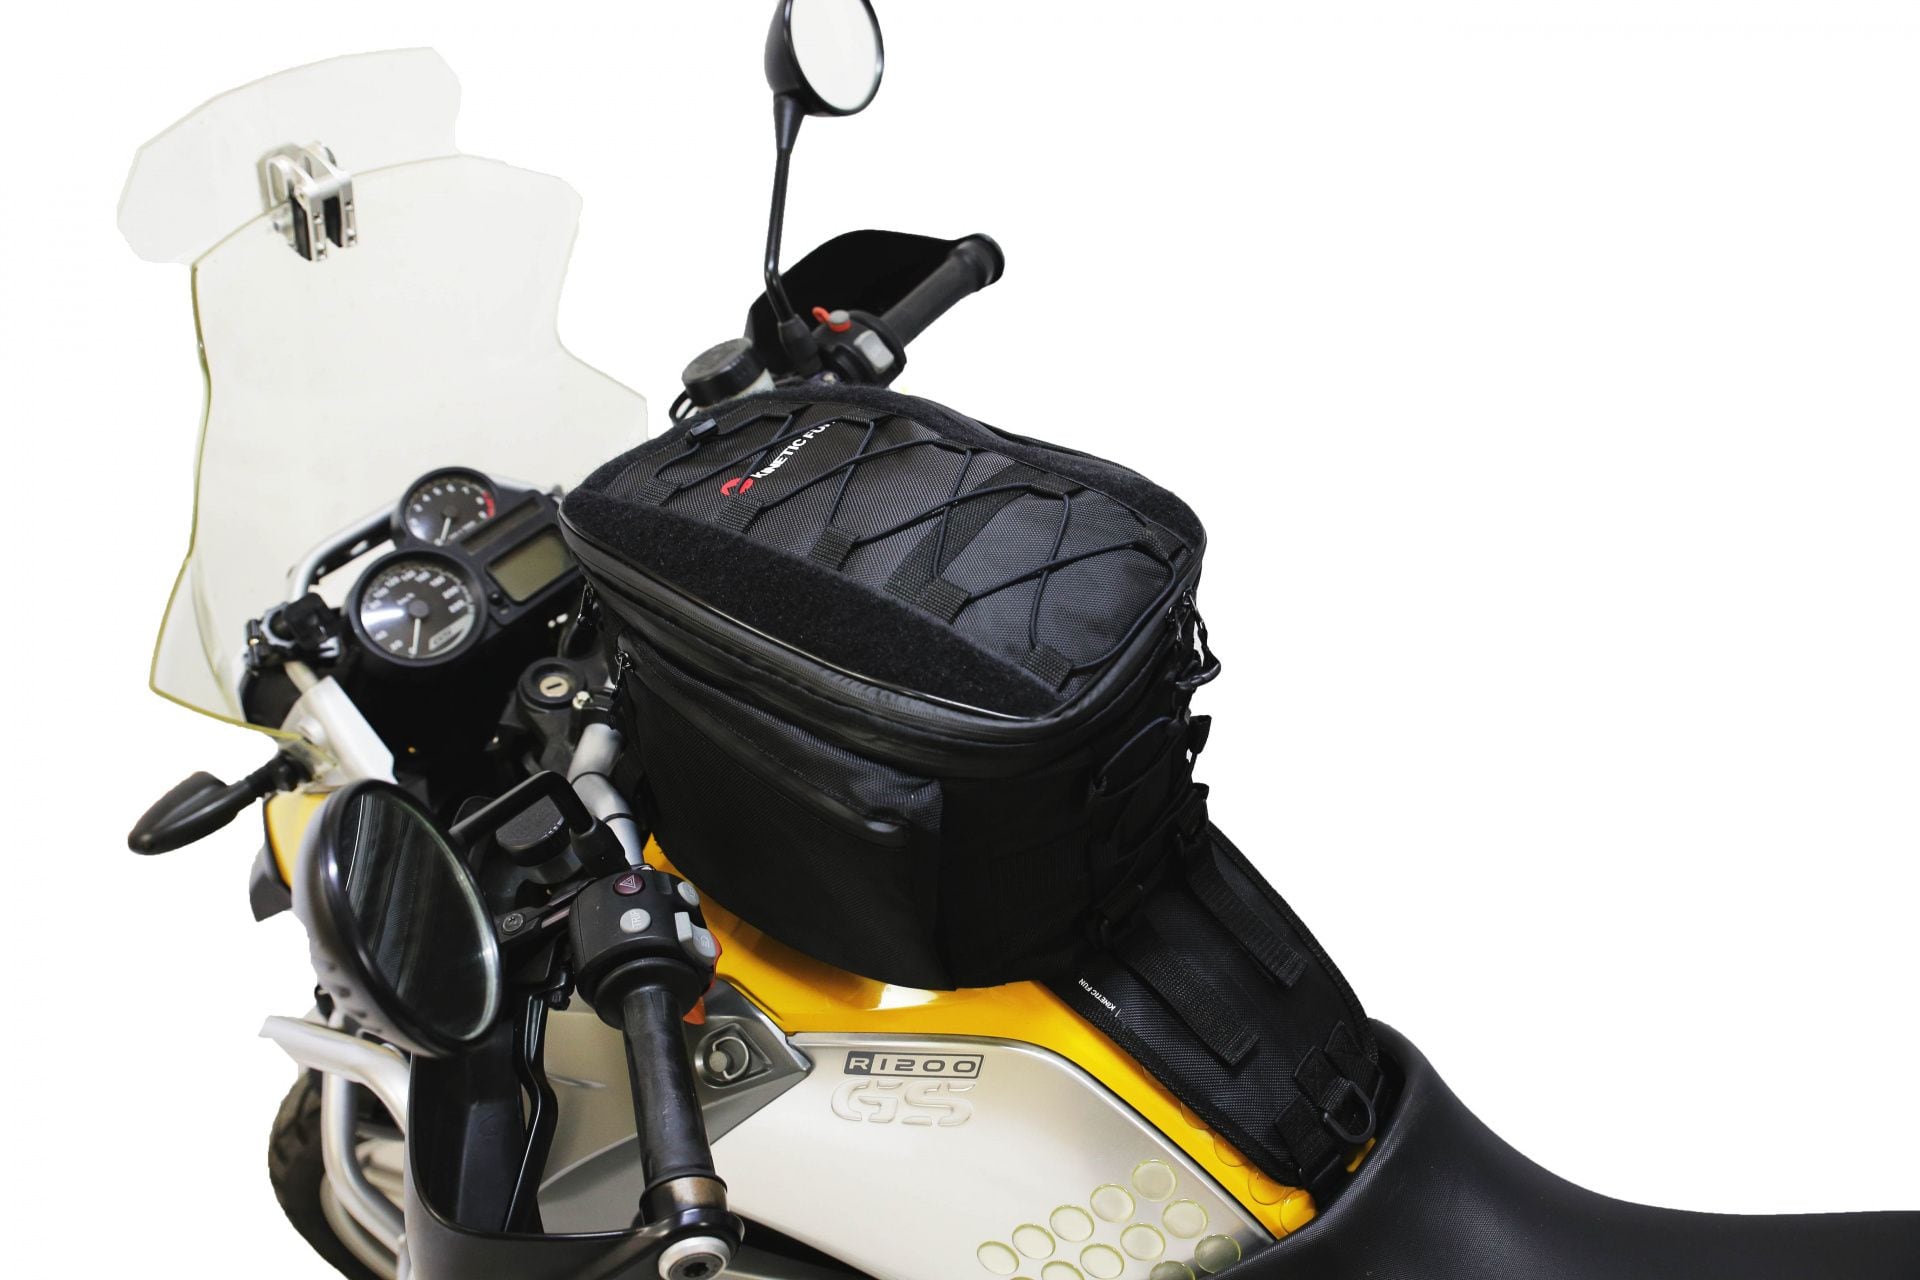 Сумка на бак мотоцикла Cagiva - Adventure (12-18 литров)+основание+планшет